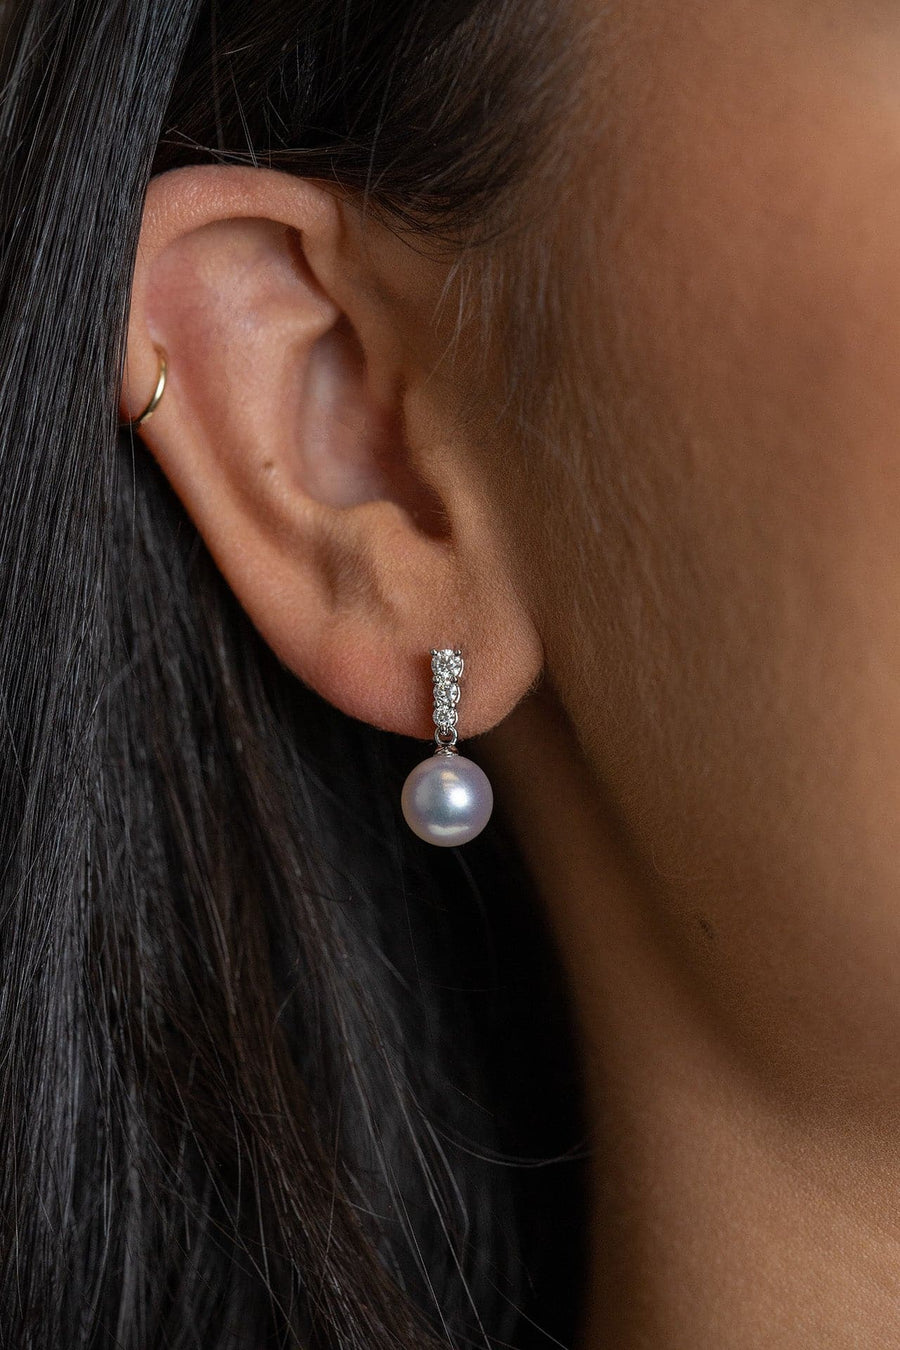 Mikimoto Morning Dew Akoya Cultured Pearl Earrings - Skeie's Jewelers